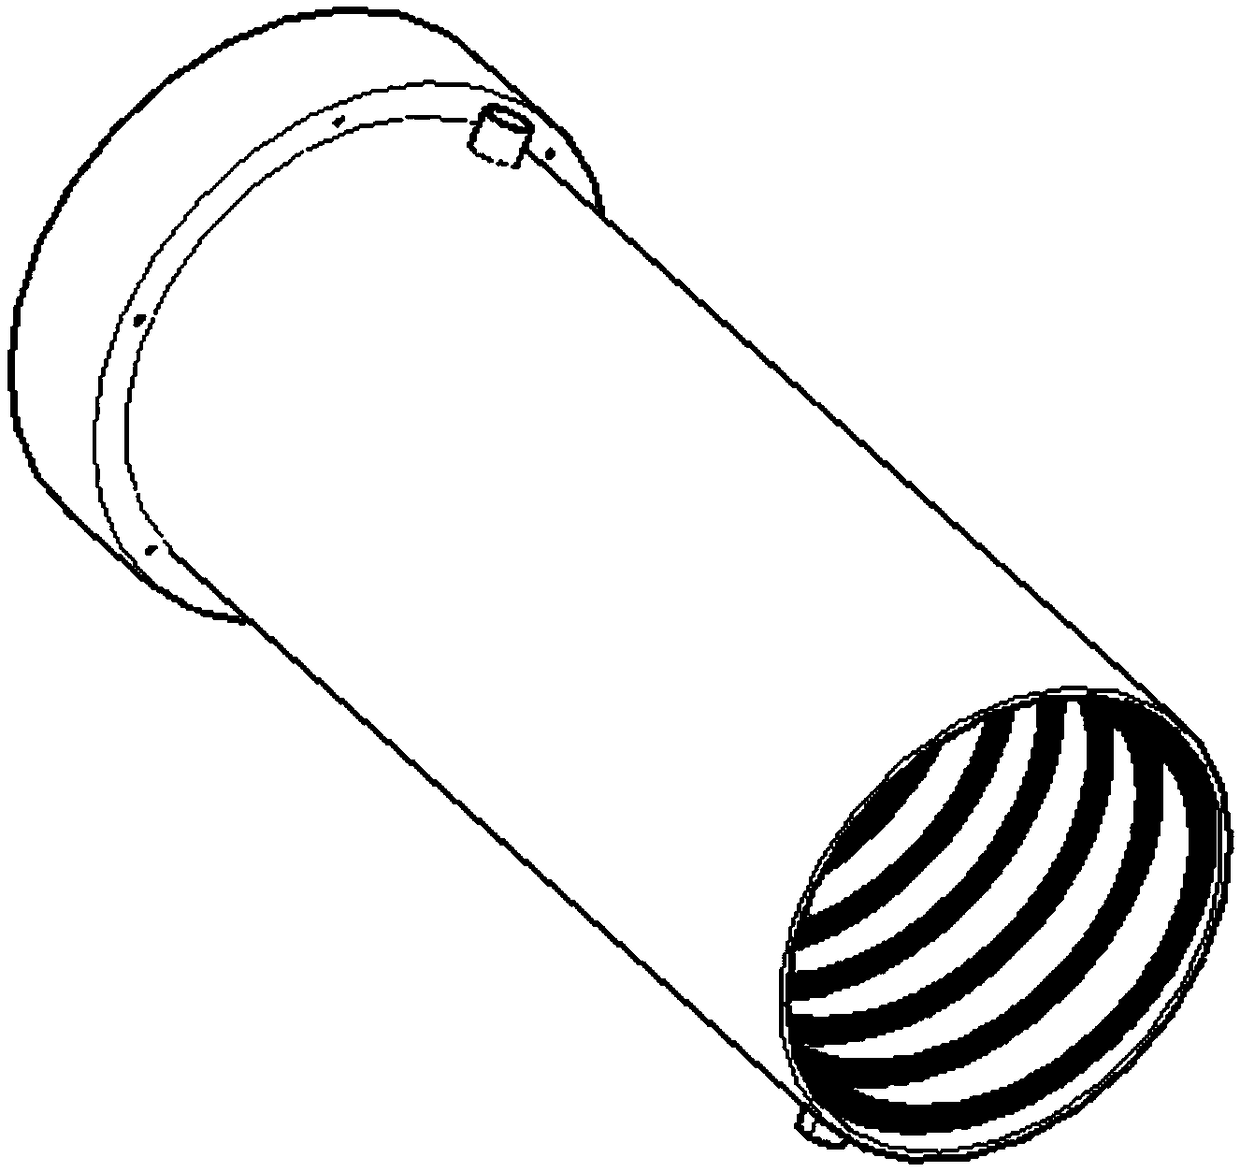 Spiral turbulent-flow blade based emitting device barrel cooling water jacket